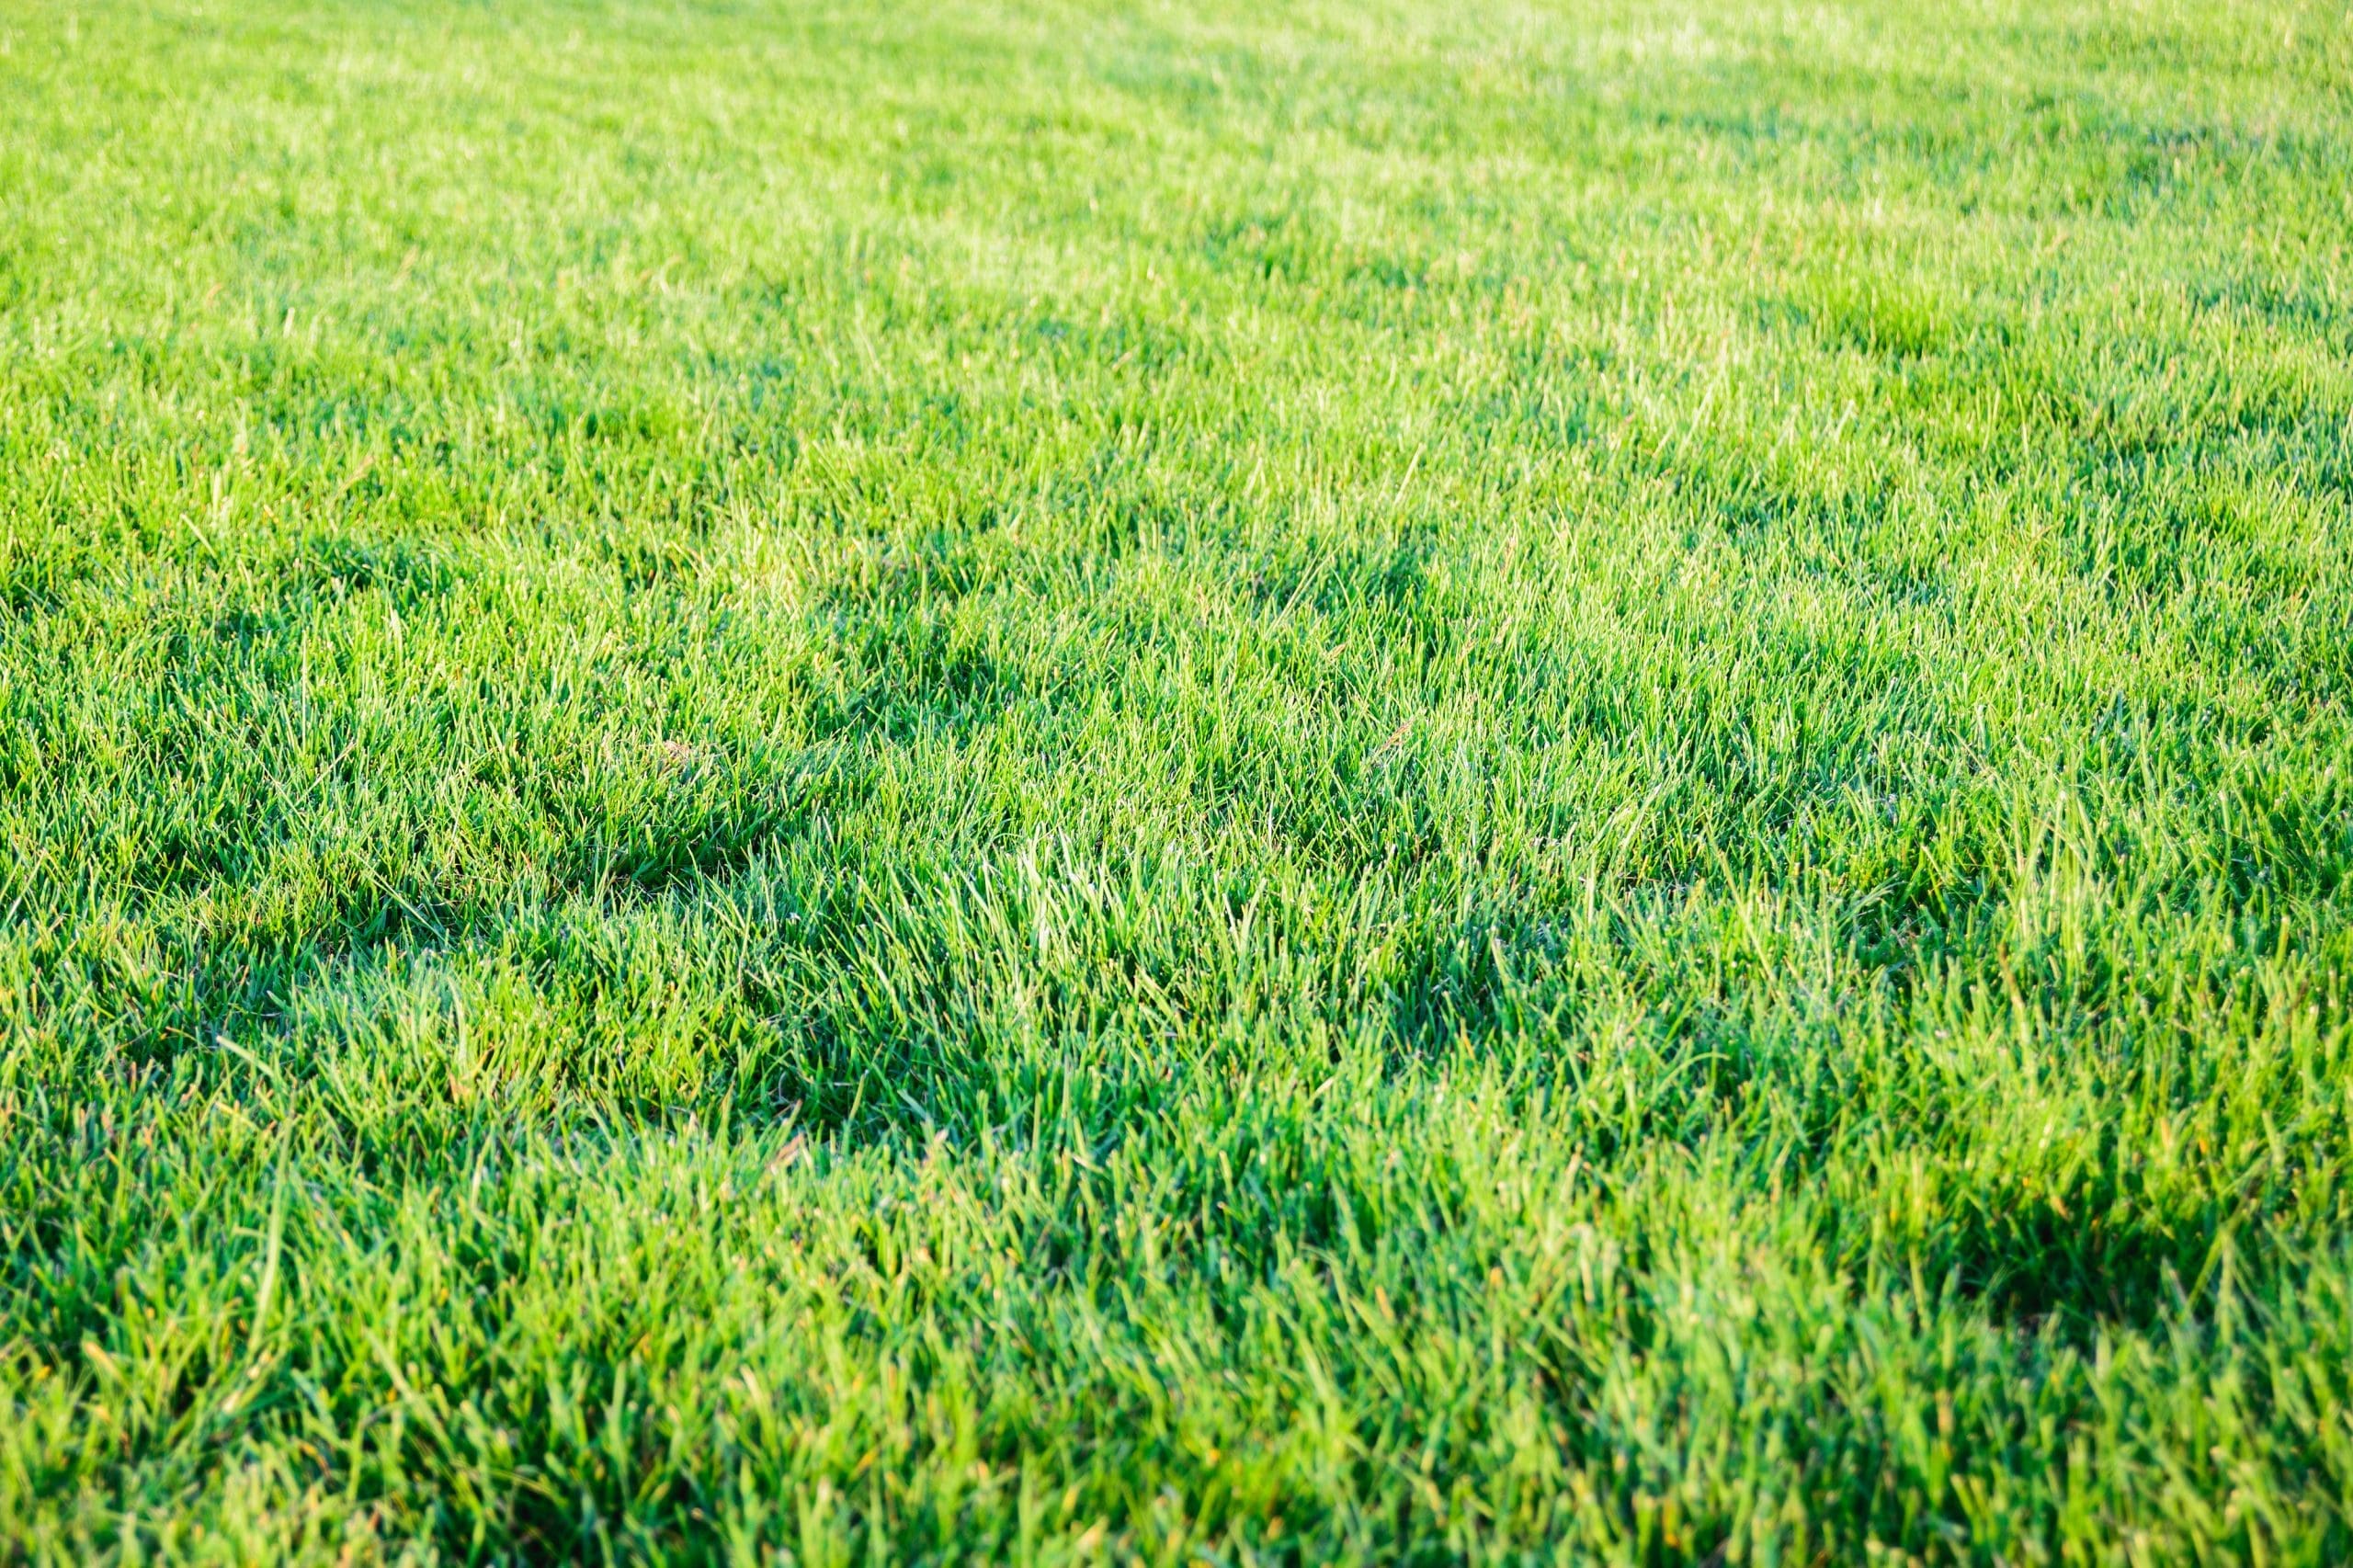 fresh uncut green lawn grass in courtyard, backyard, garden, playground, angle above view, horizontal outdoors closeup East Greenwich, RI